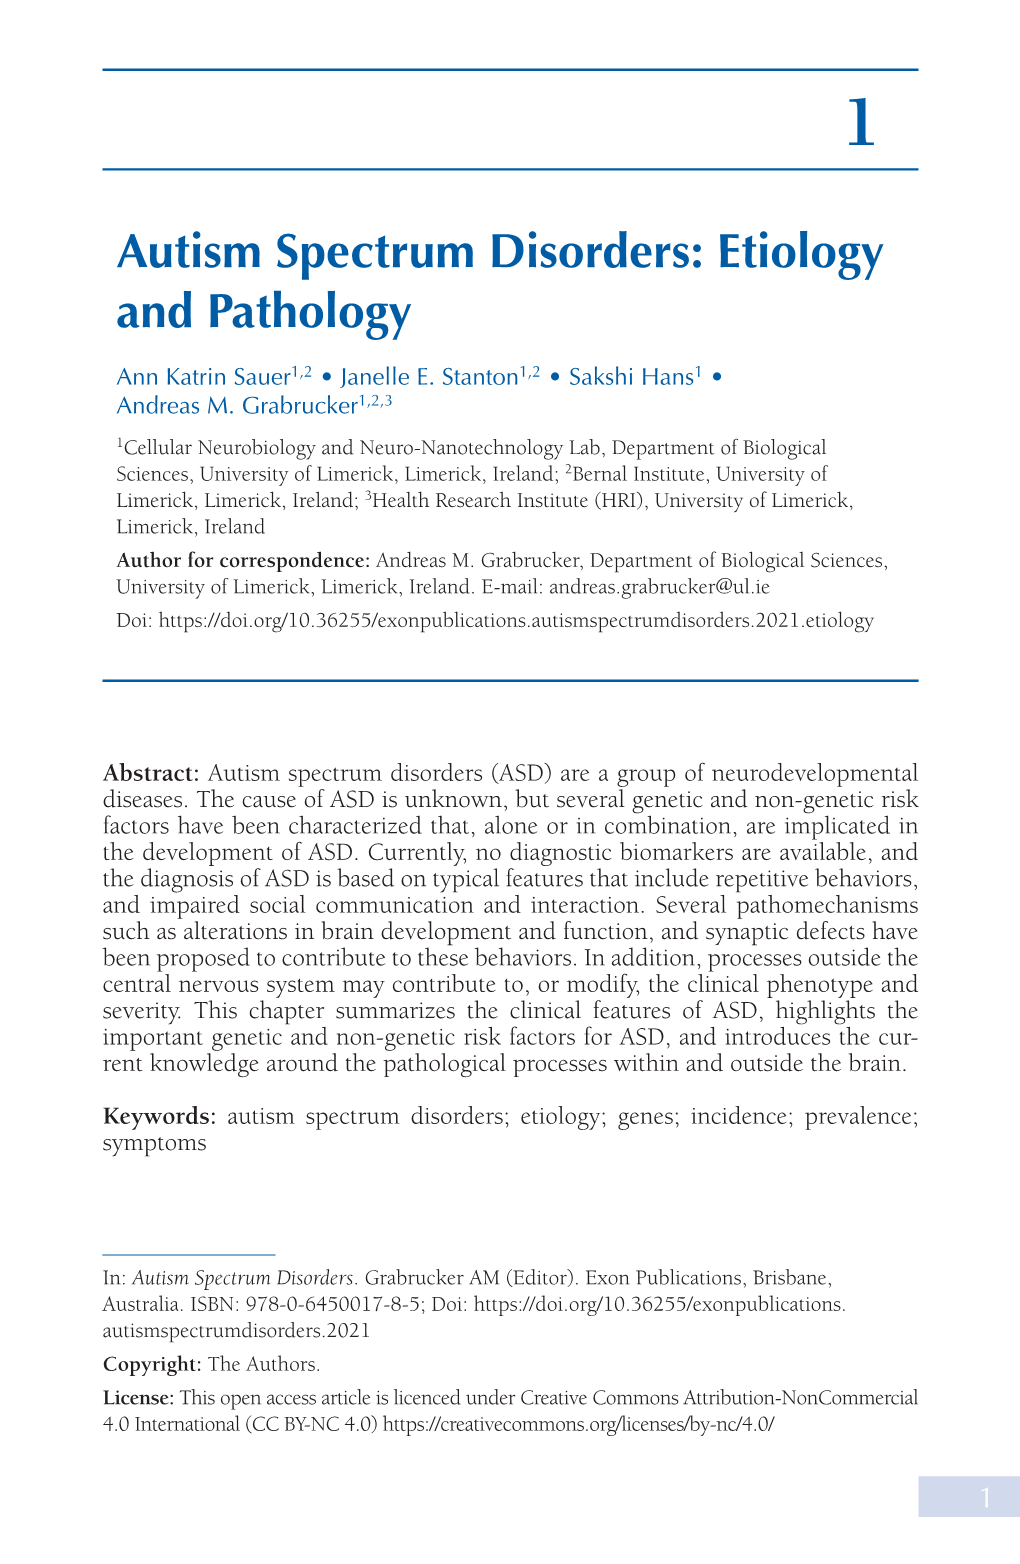 Autism Spectrum Disorders: Etiology and Pathology